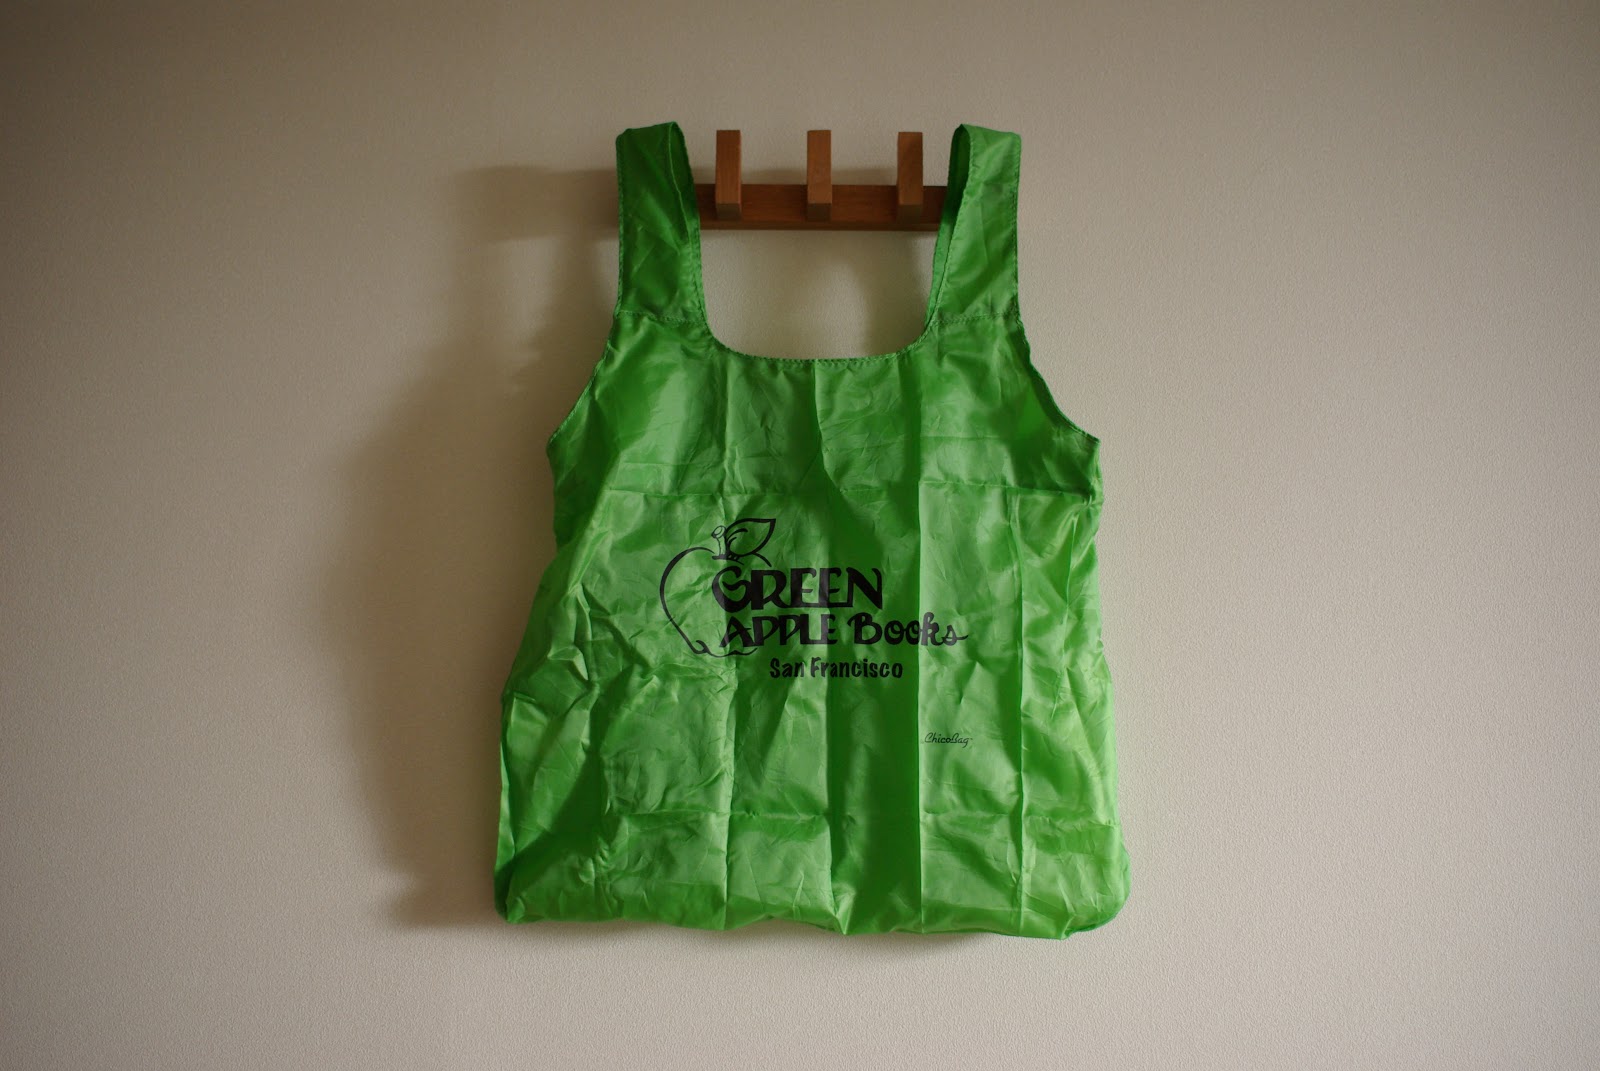 GREEN APPLE BOOKSのエコバッグ #2 | ECO BAGS